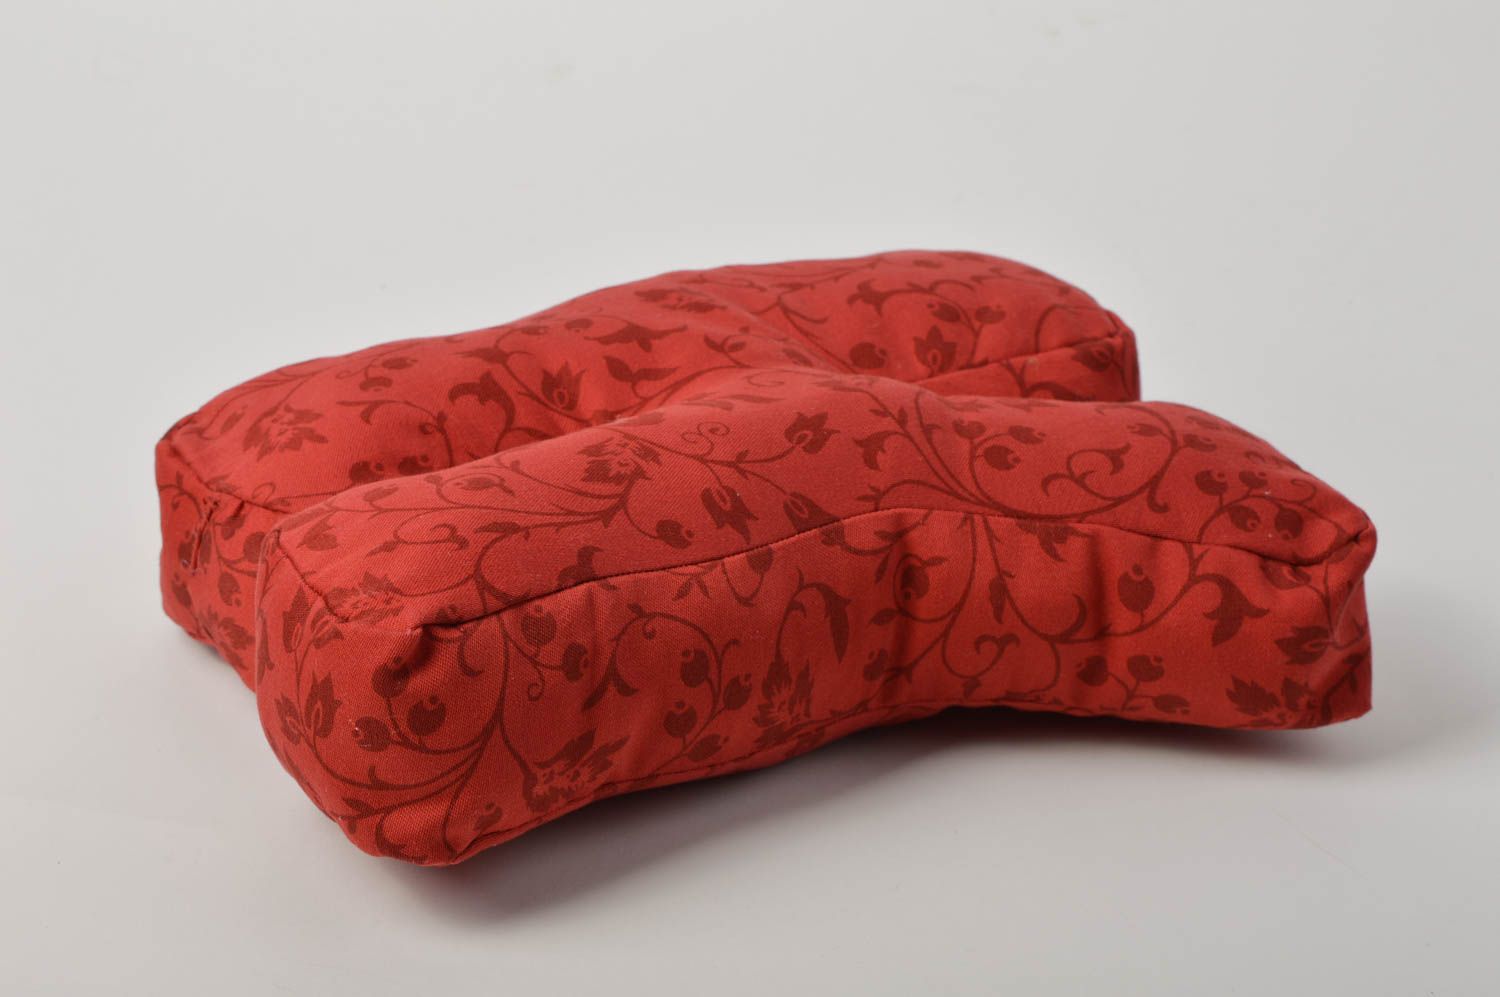 Unusual handmade cushion ideas throw pillow gift ideas decorative use only photo 5